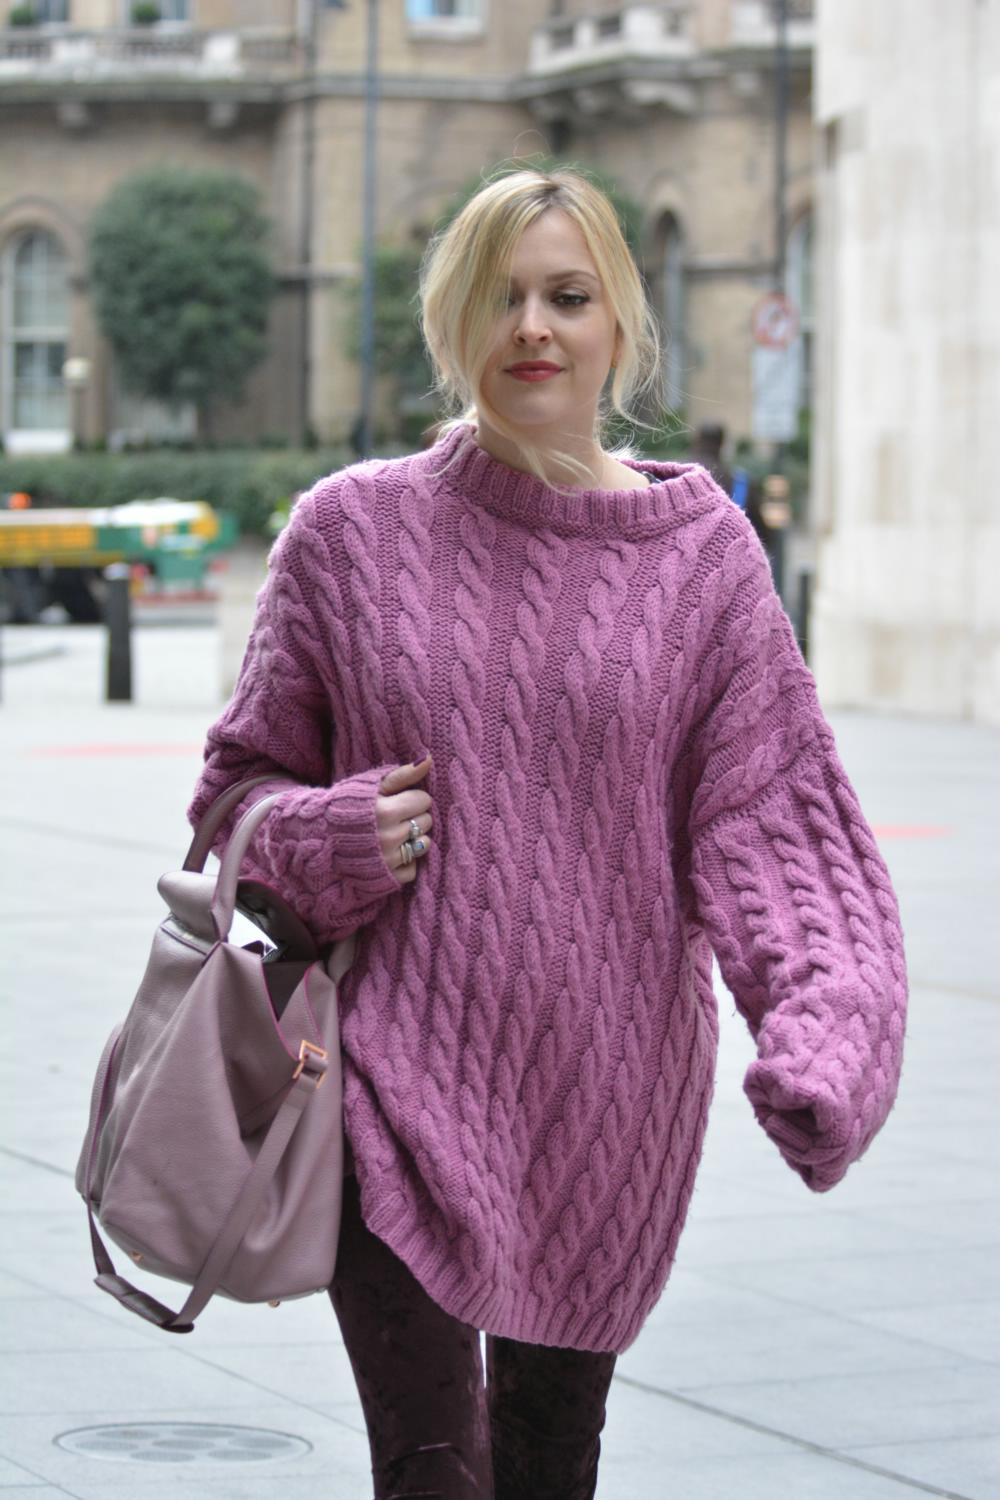 Fearne Cotton Wears Baggy Pink Jumper for work